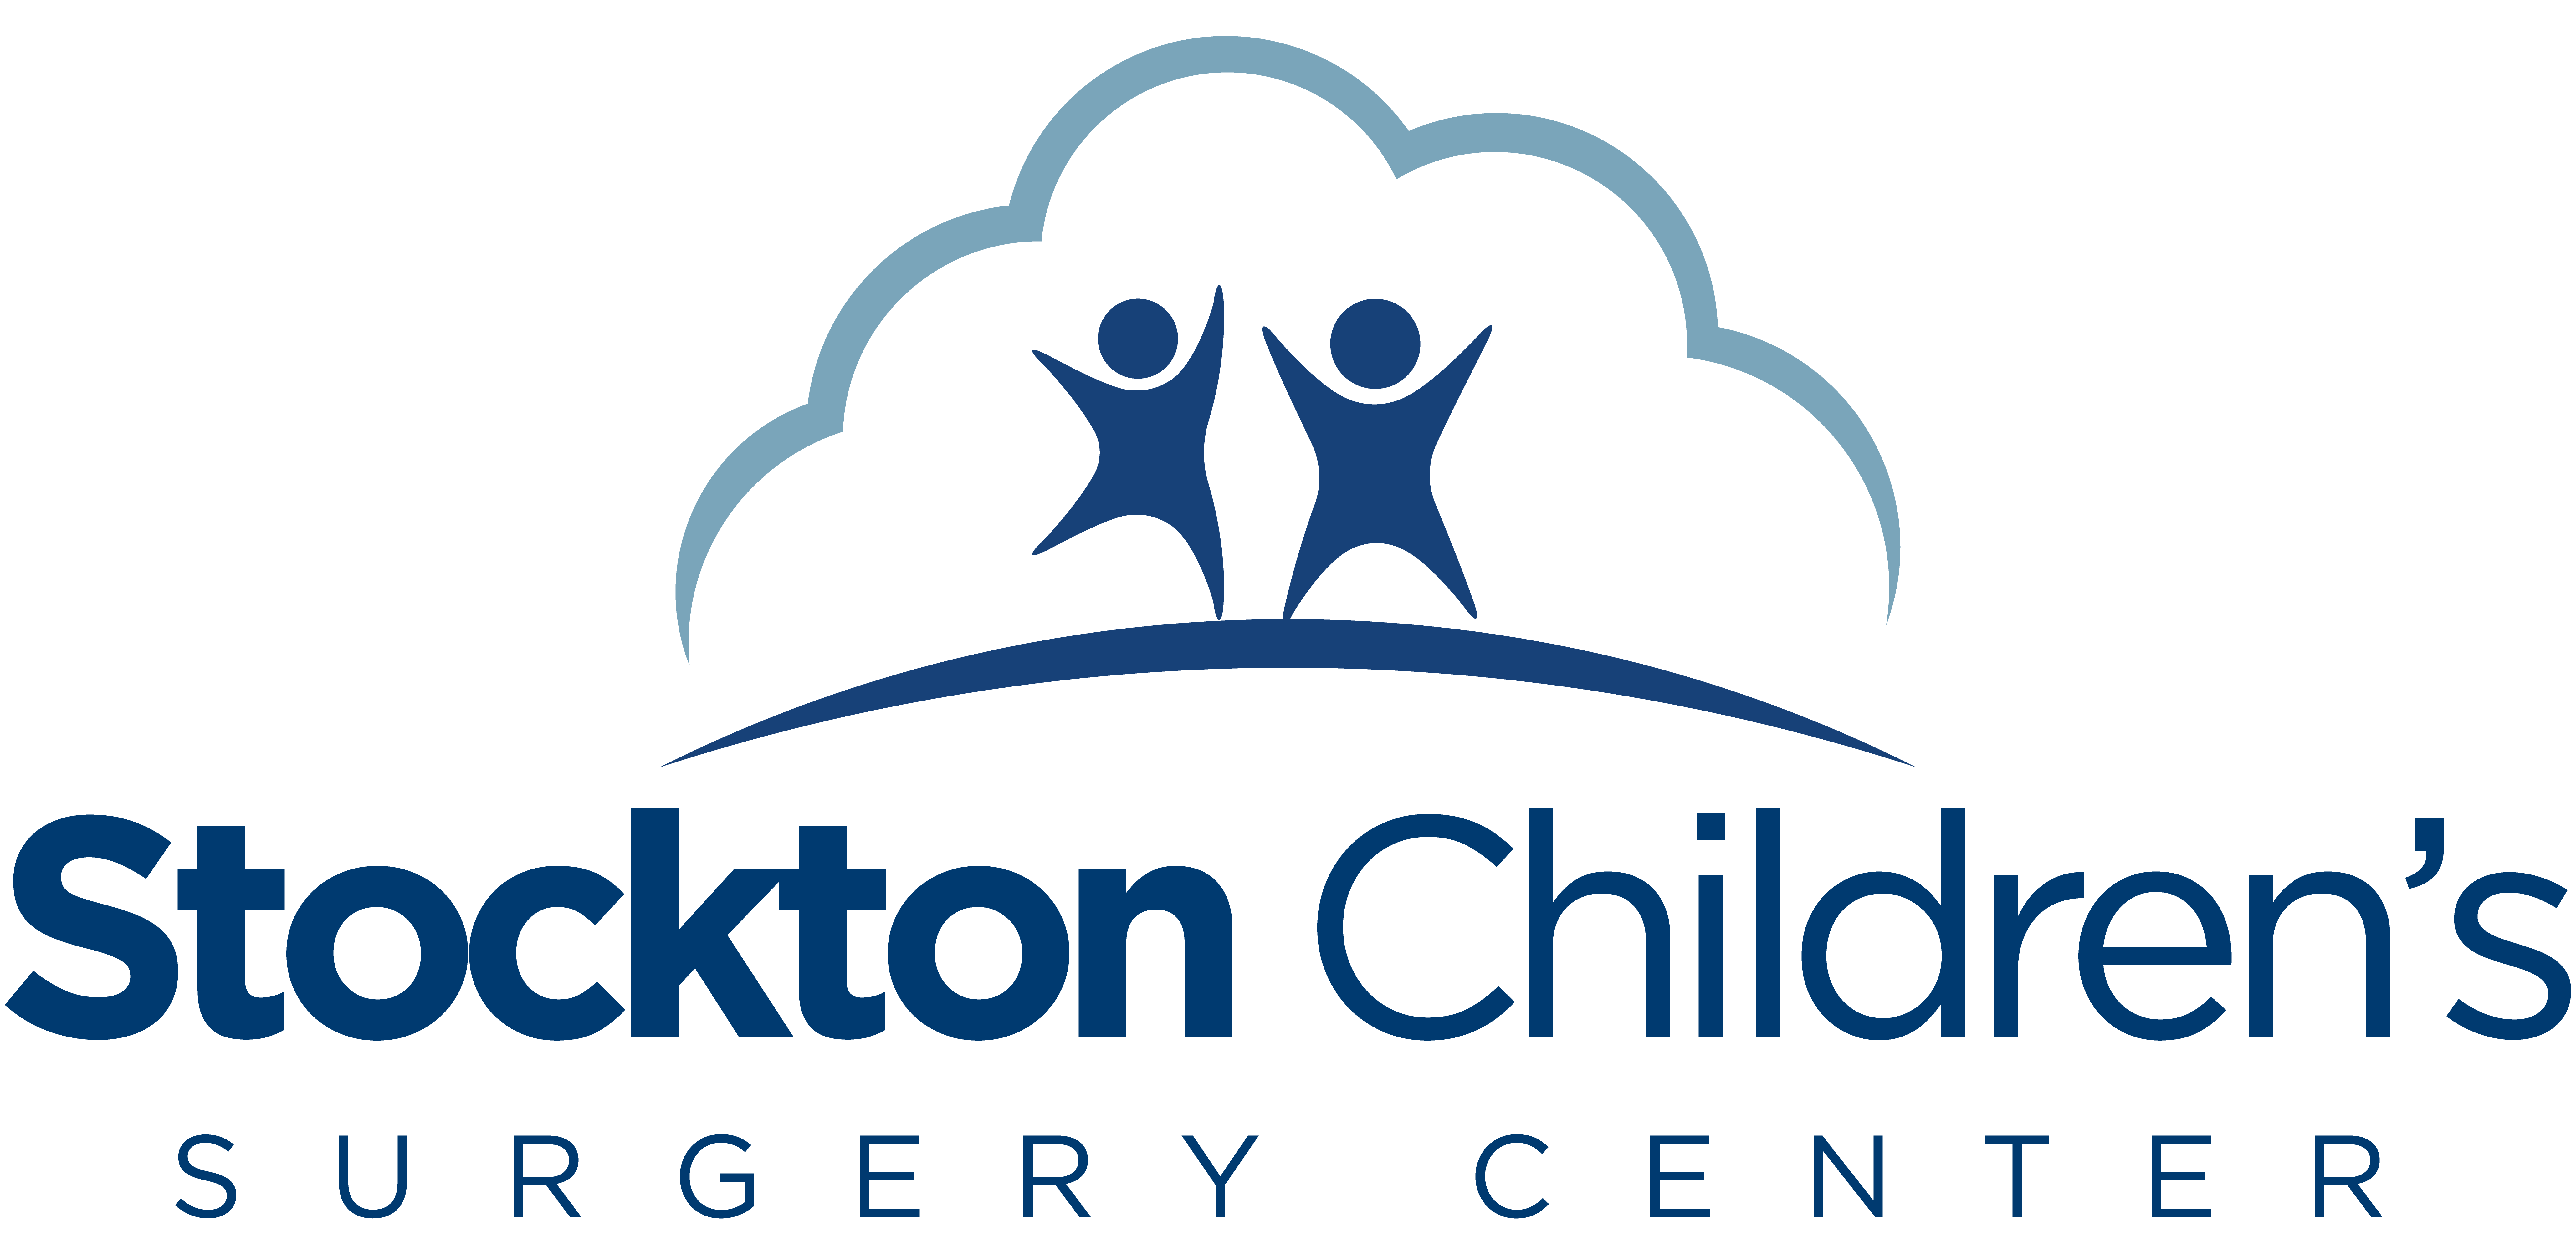 Stockton Children's Surgery Center